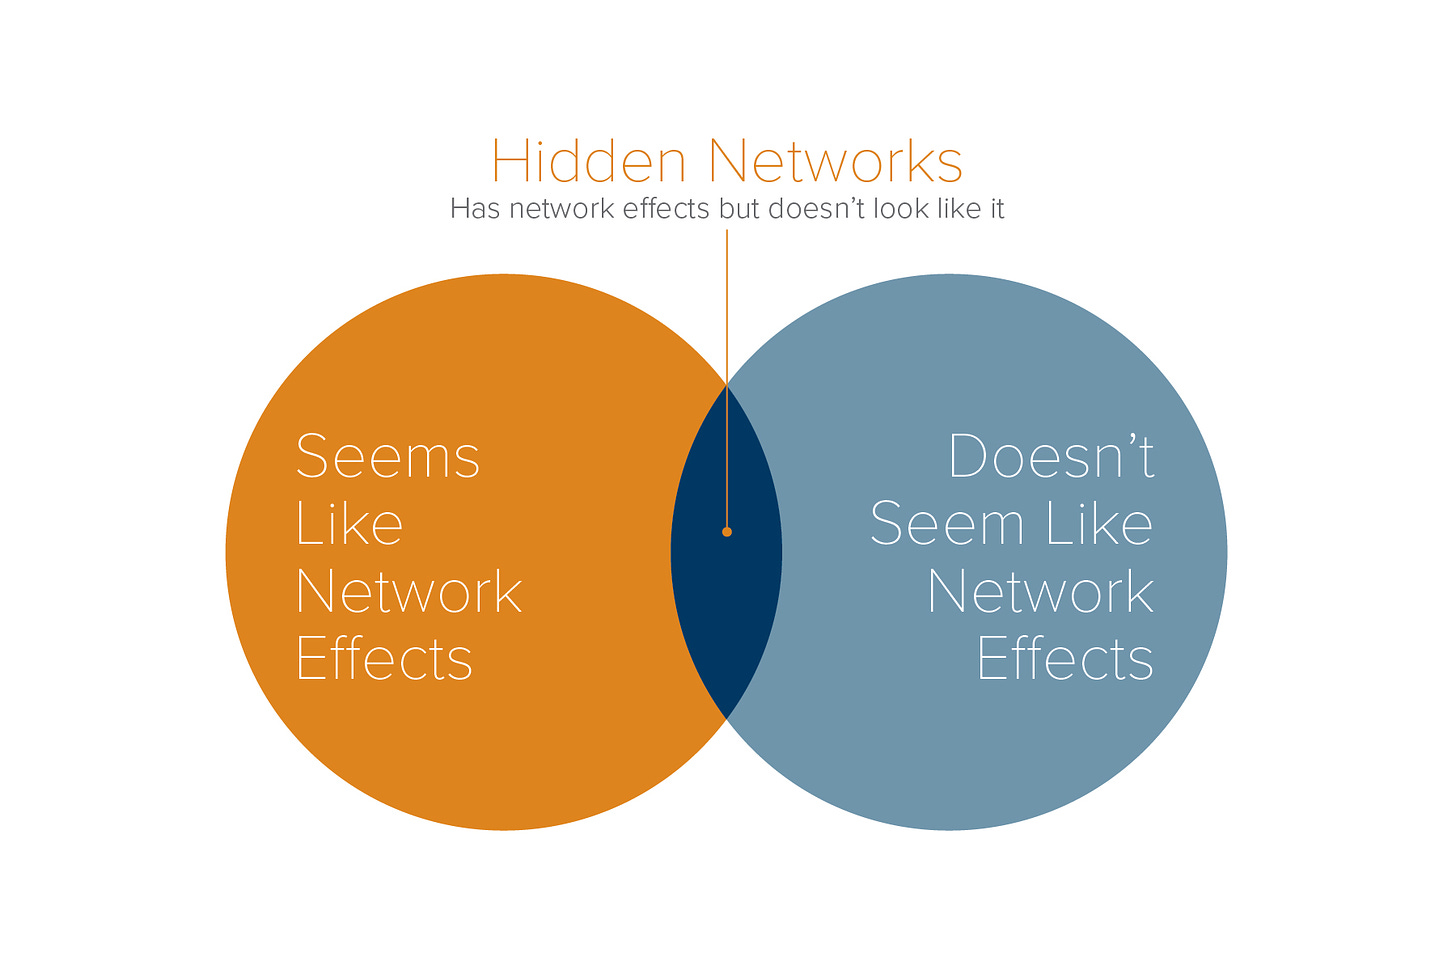 Hidden networks effects are often hiding in plain sight.